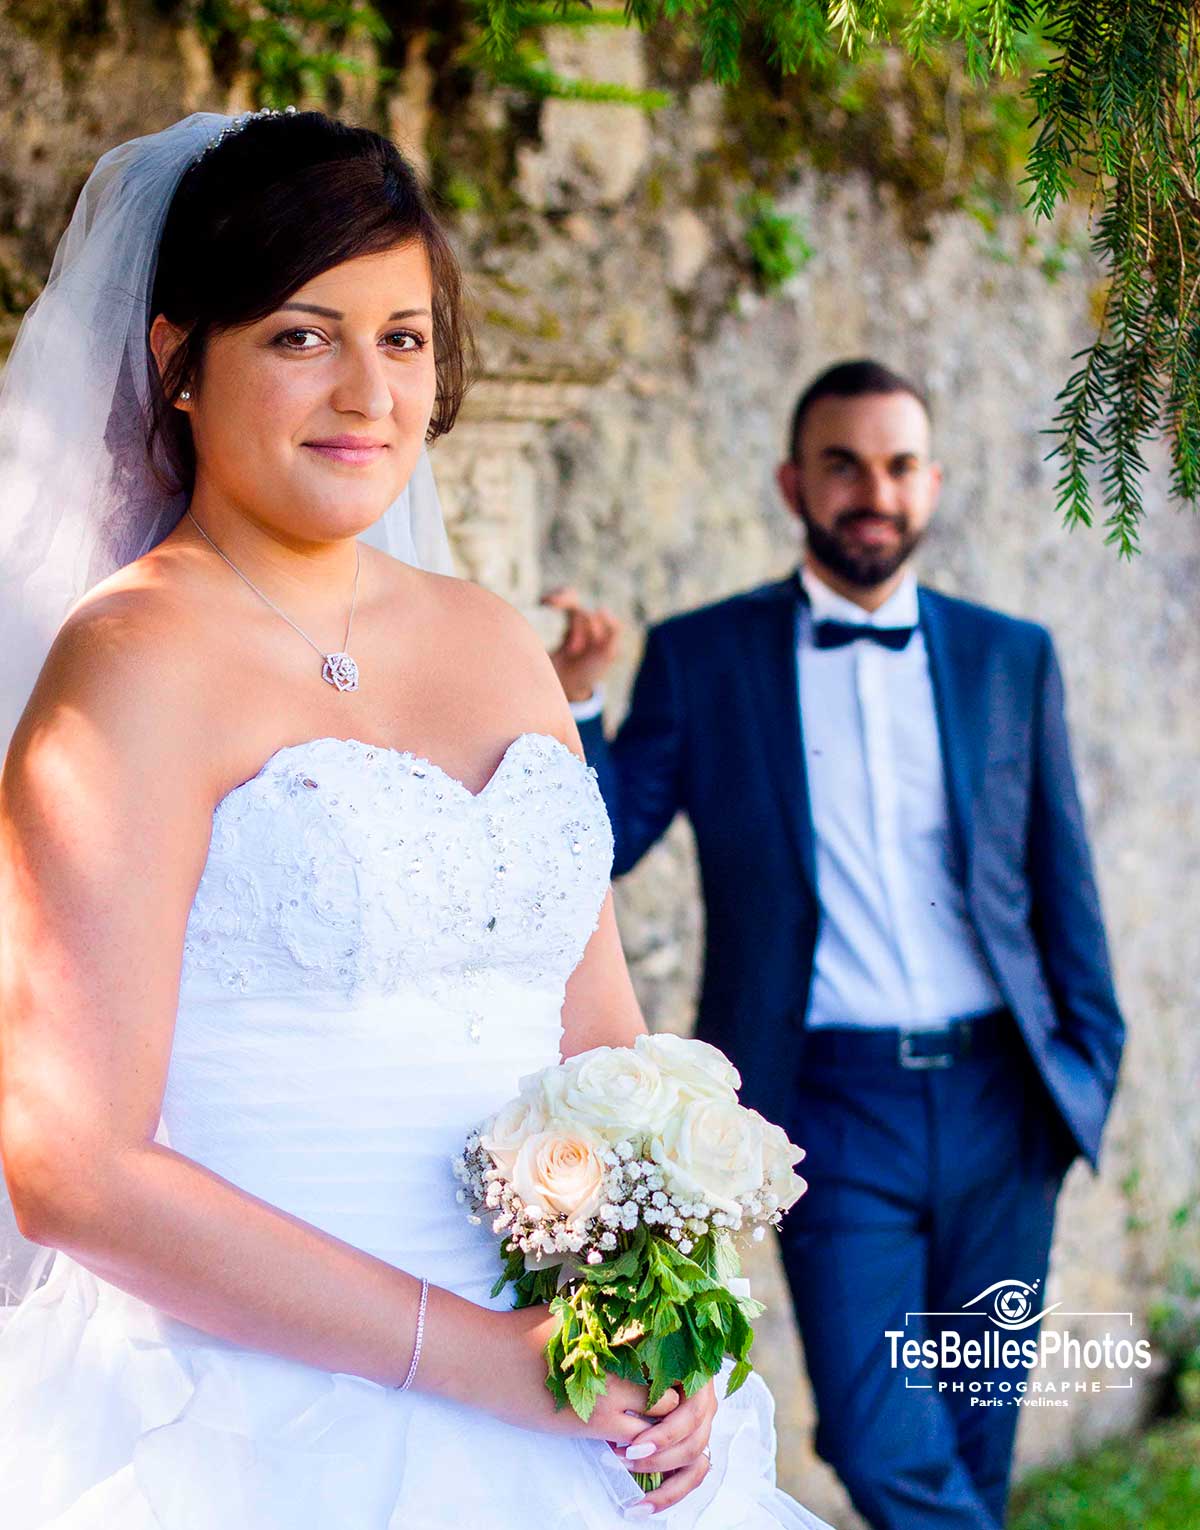 Photographe mariage Saint-Léger-en-Yvelines, shooting couple mariage Saint-Léger-en-Yvelines